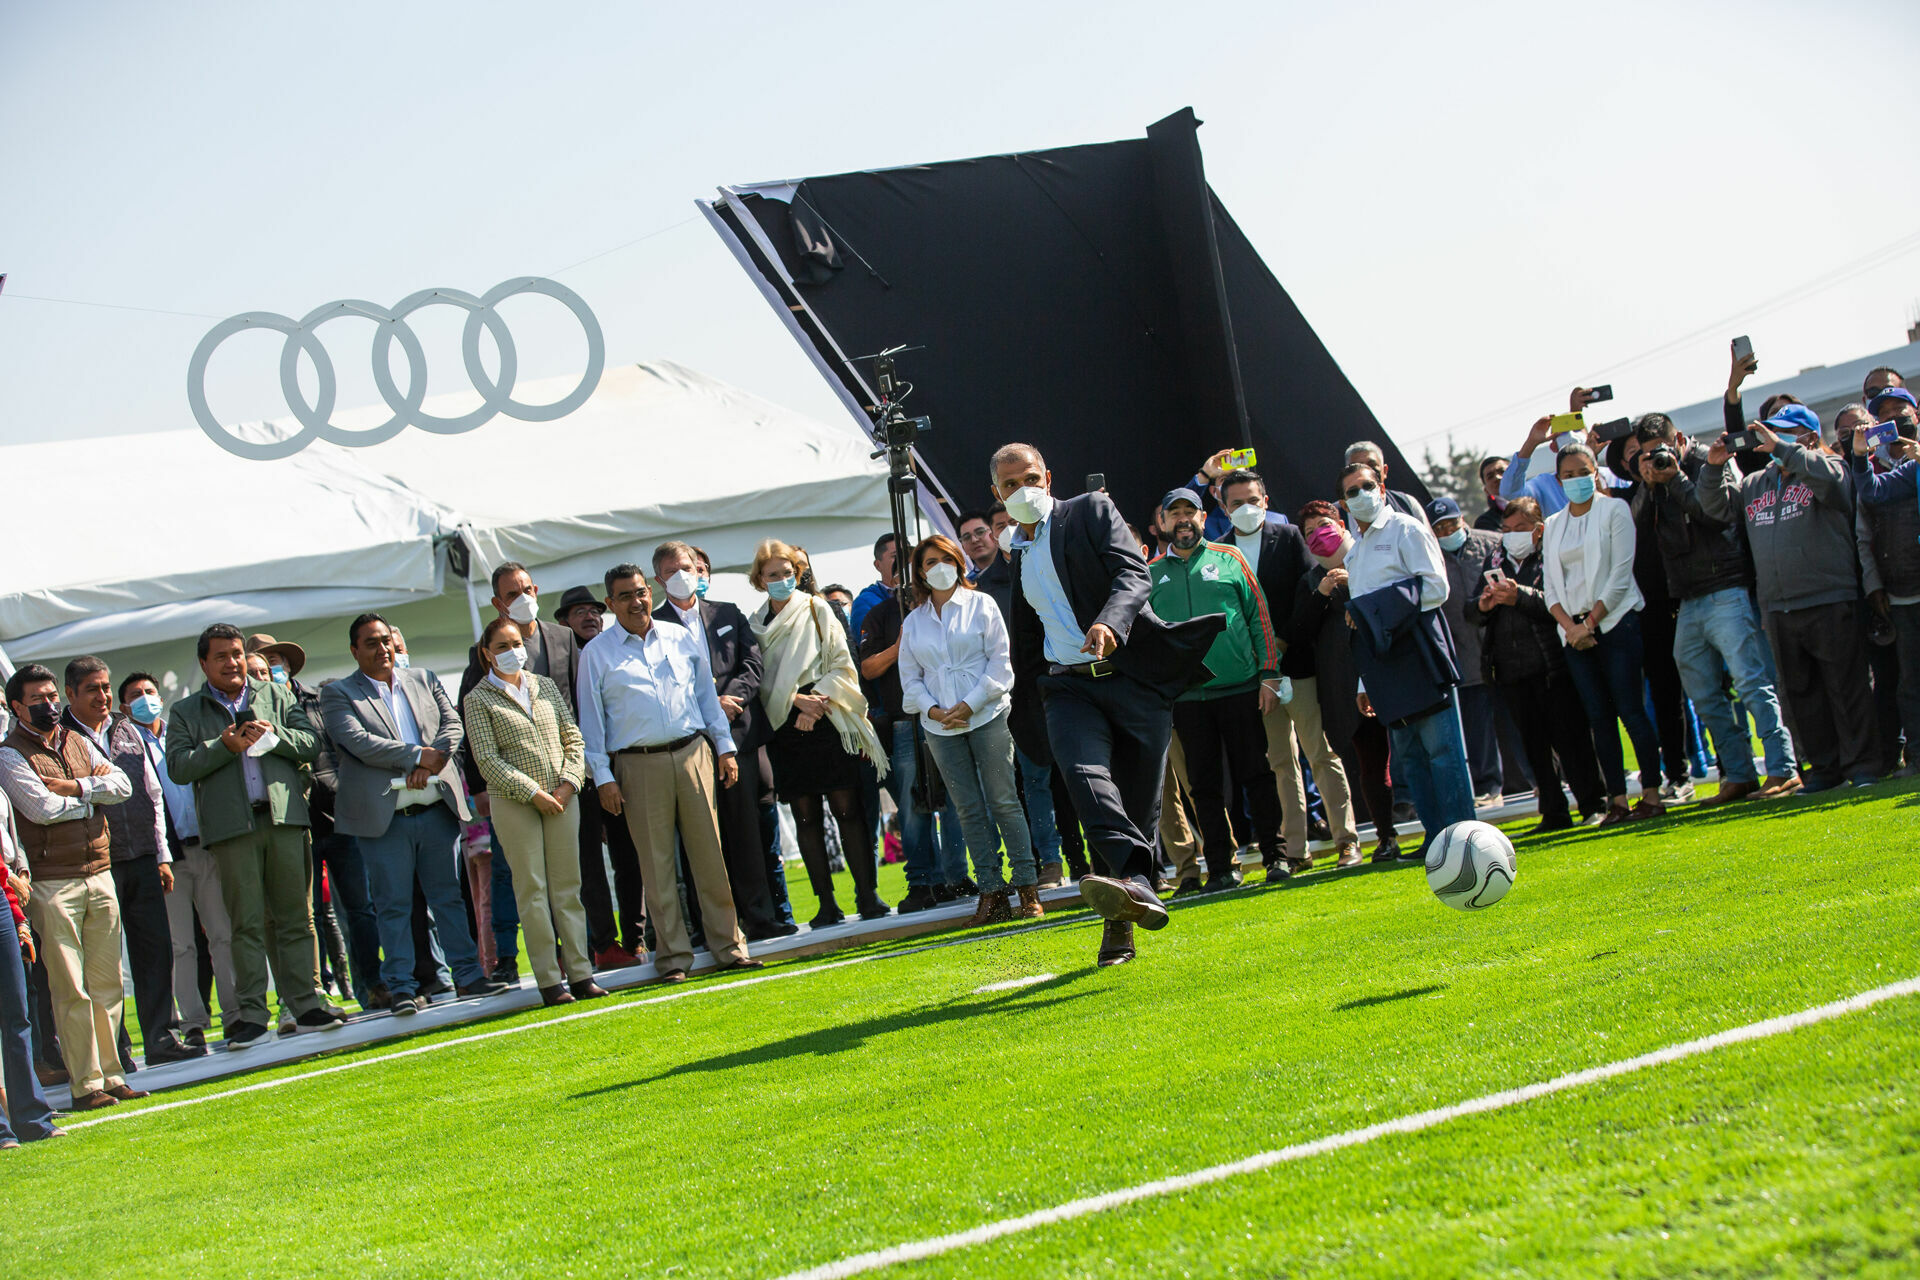 Audi Mexico and San Jose Chiapa inaugurate Sports Park